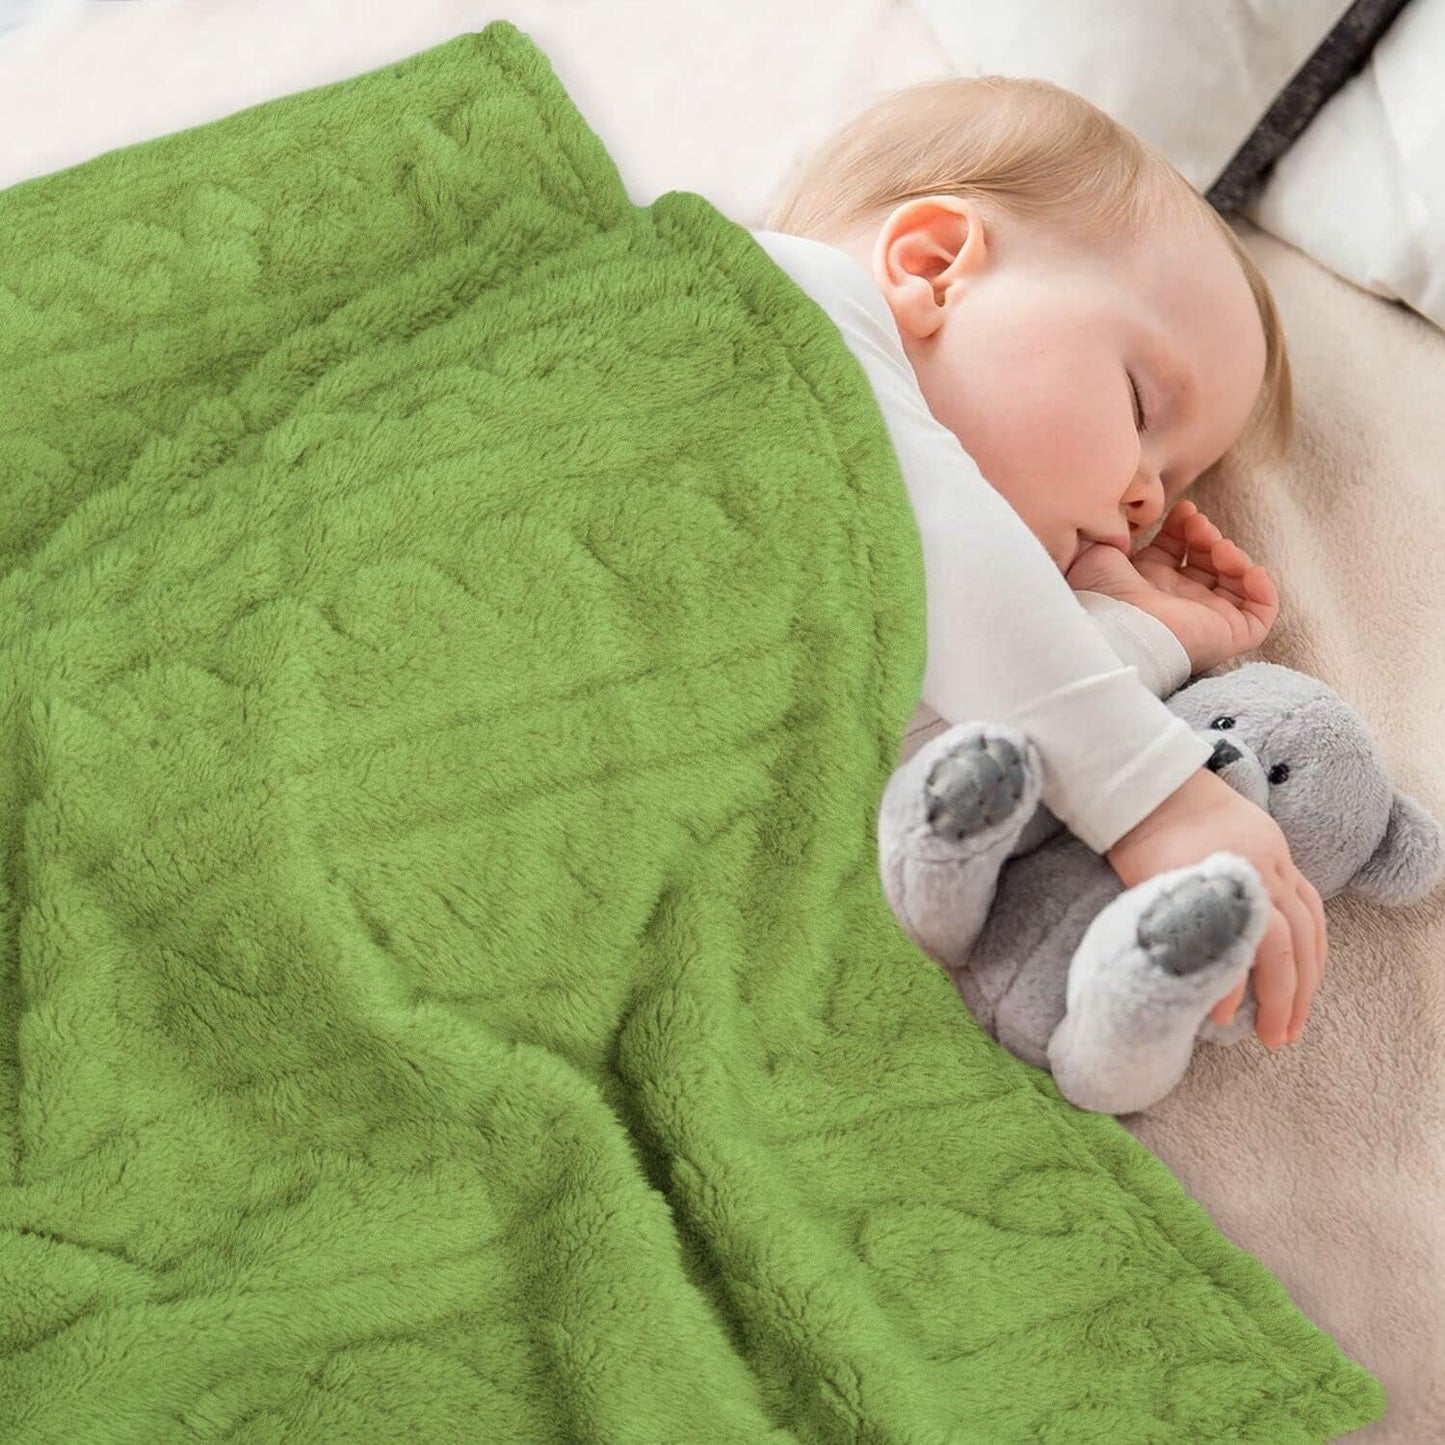 HOMRITAR Baby Blanket for Boys or Girls 3D Fluffy Fuzzy Blanket for Baby, Soft Warm Cozy Flannel Fleece Warm Blanket, Infant or Newborn Receiving Blanket (30x40inch, Cream)